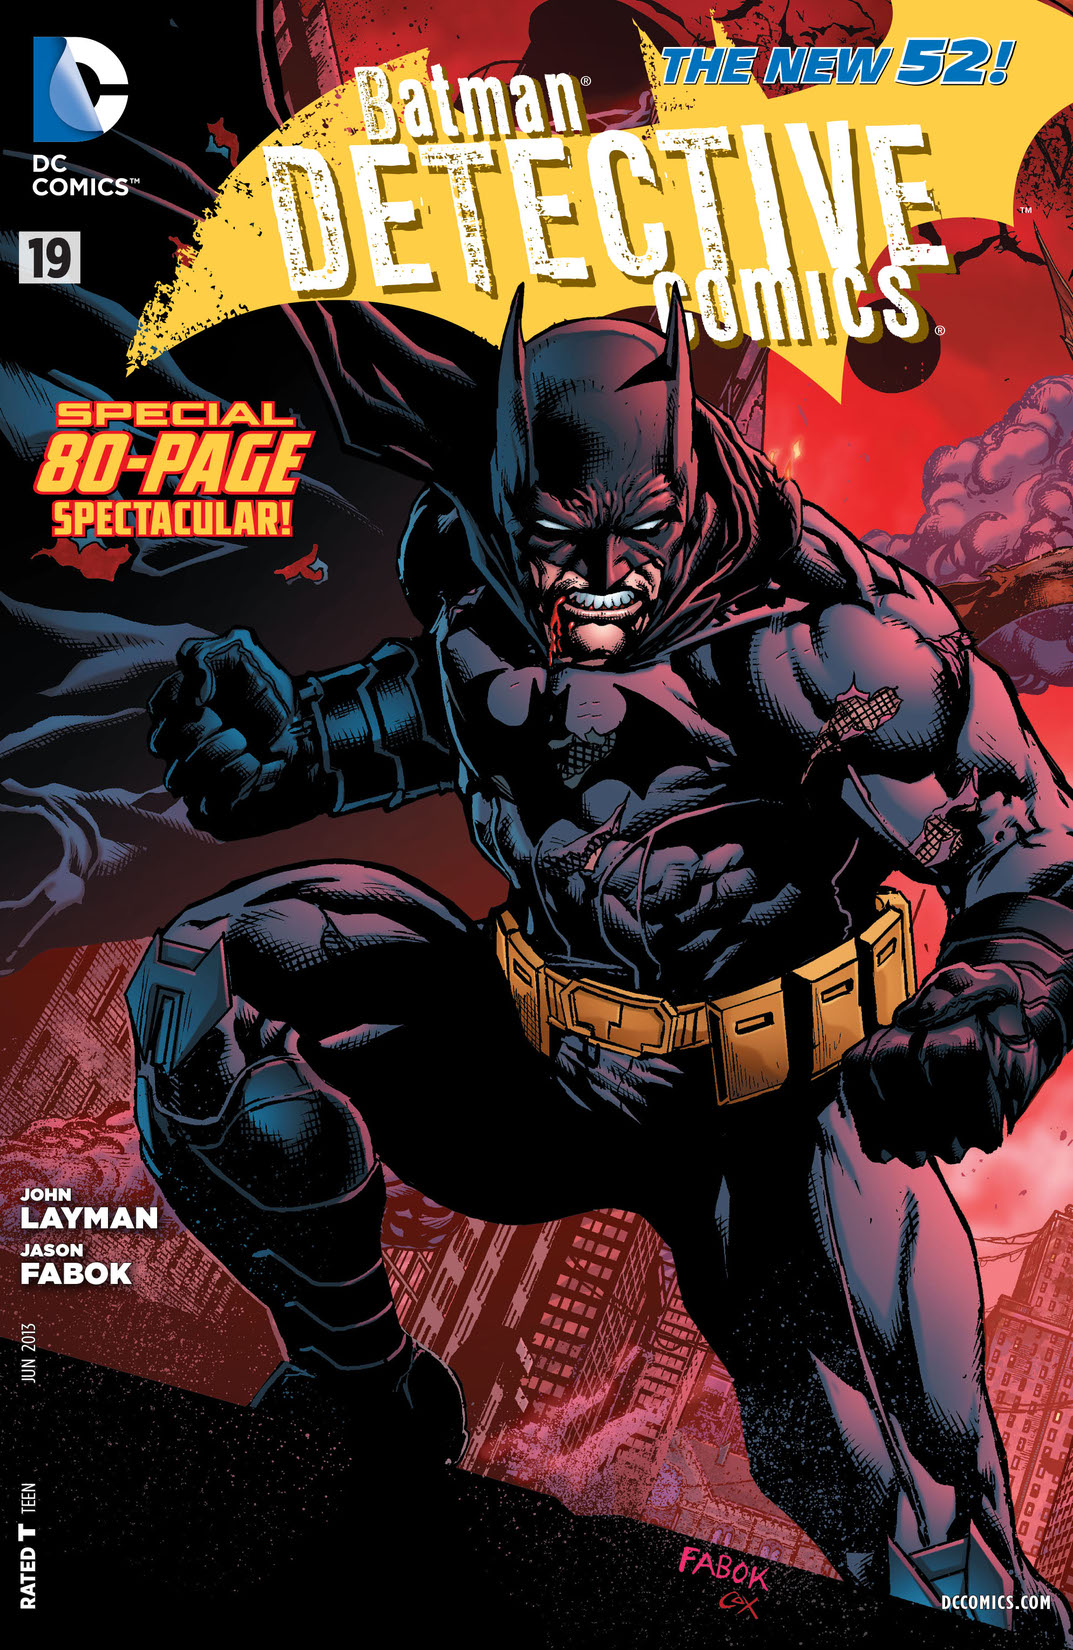 Detective Comics (2011-) #19 preview images